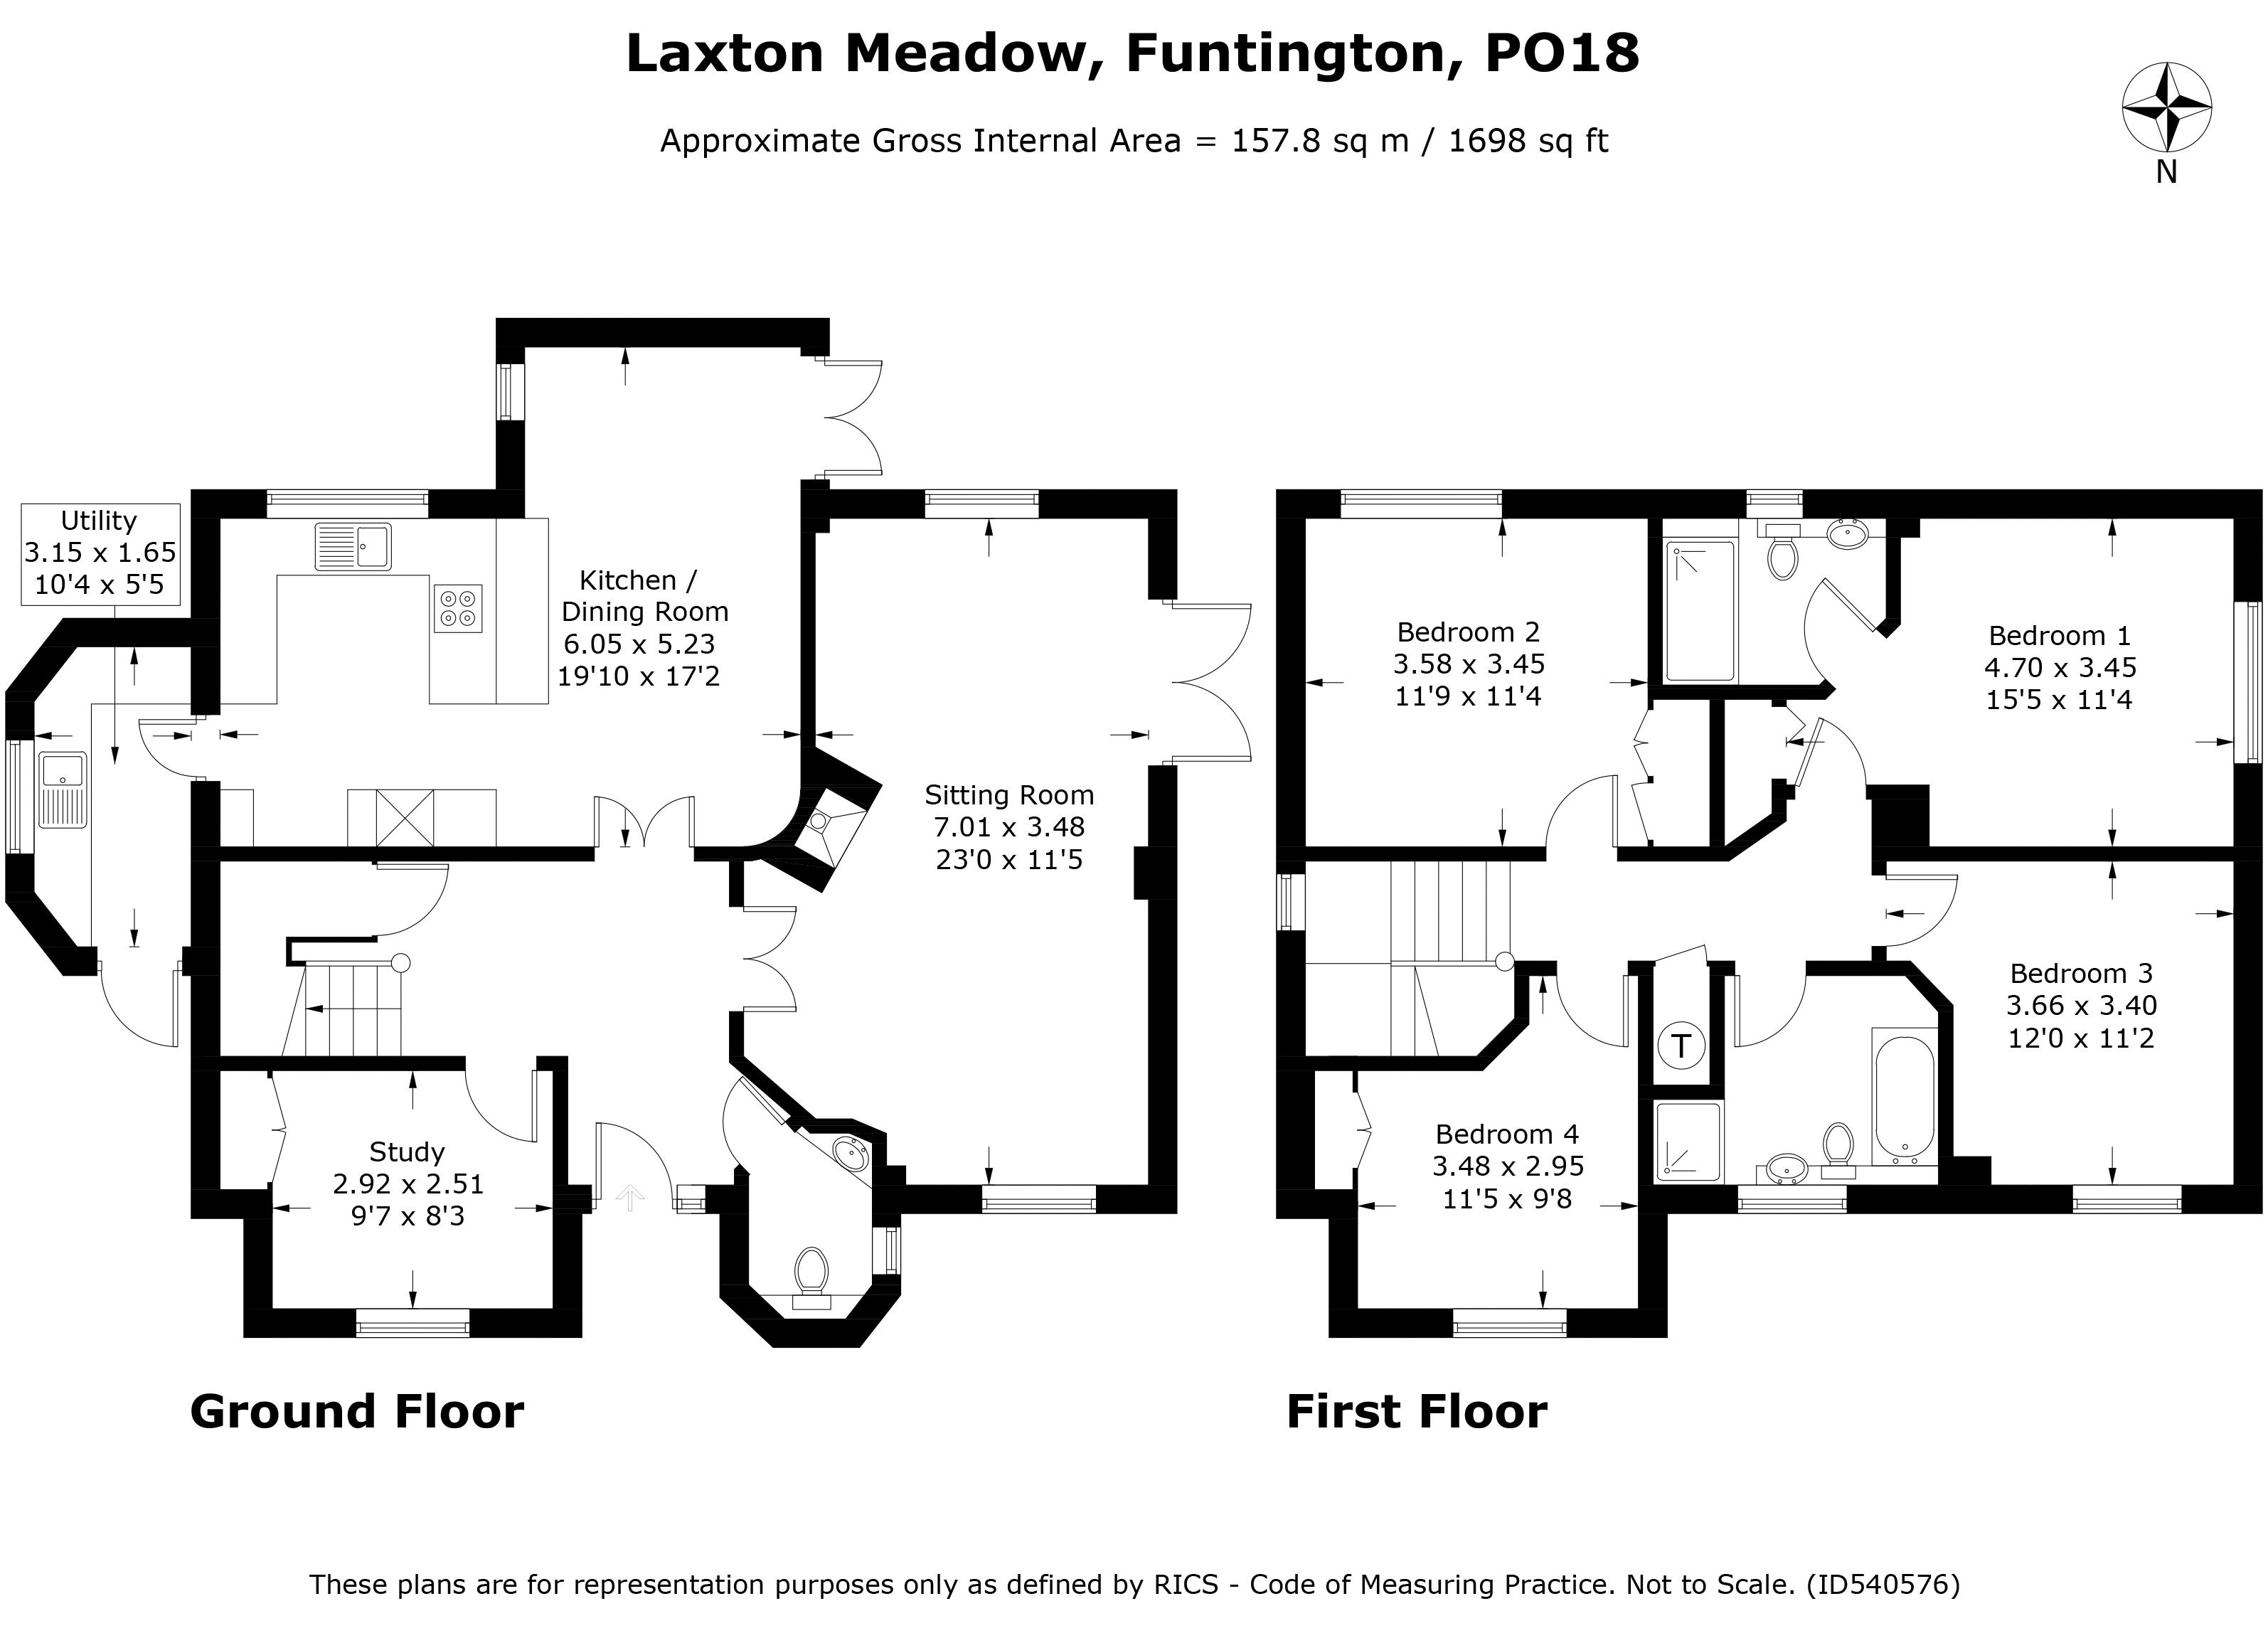 Laxton Meadow Funtington